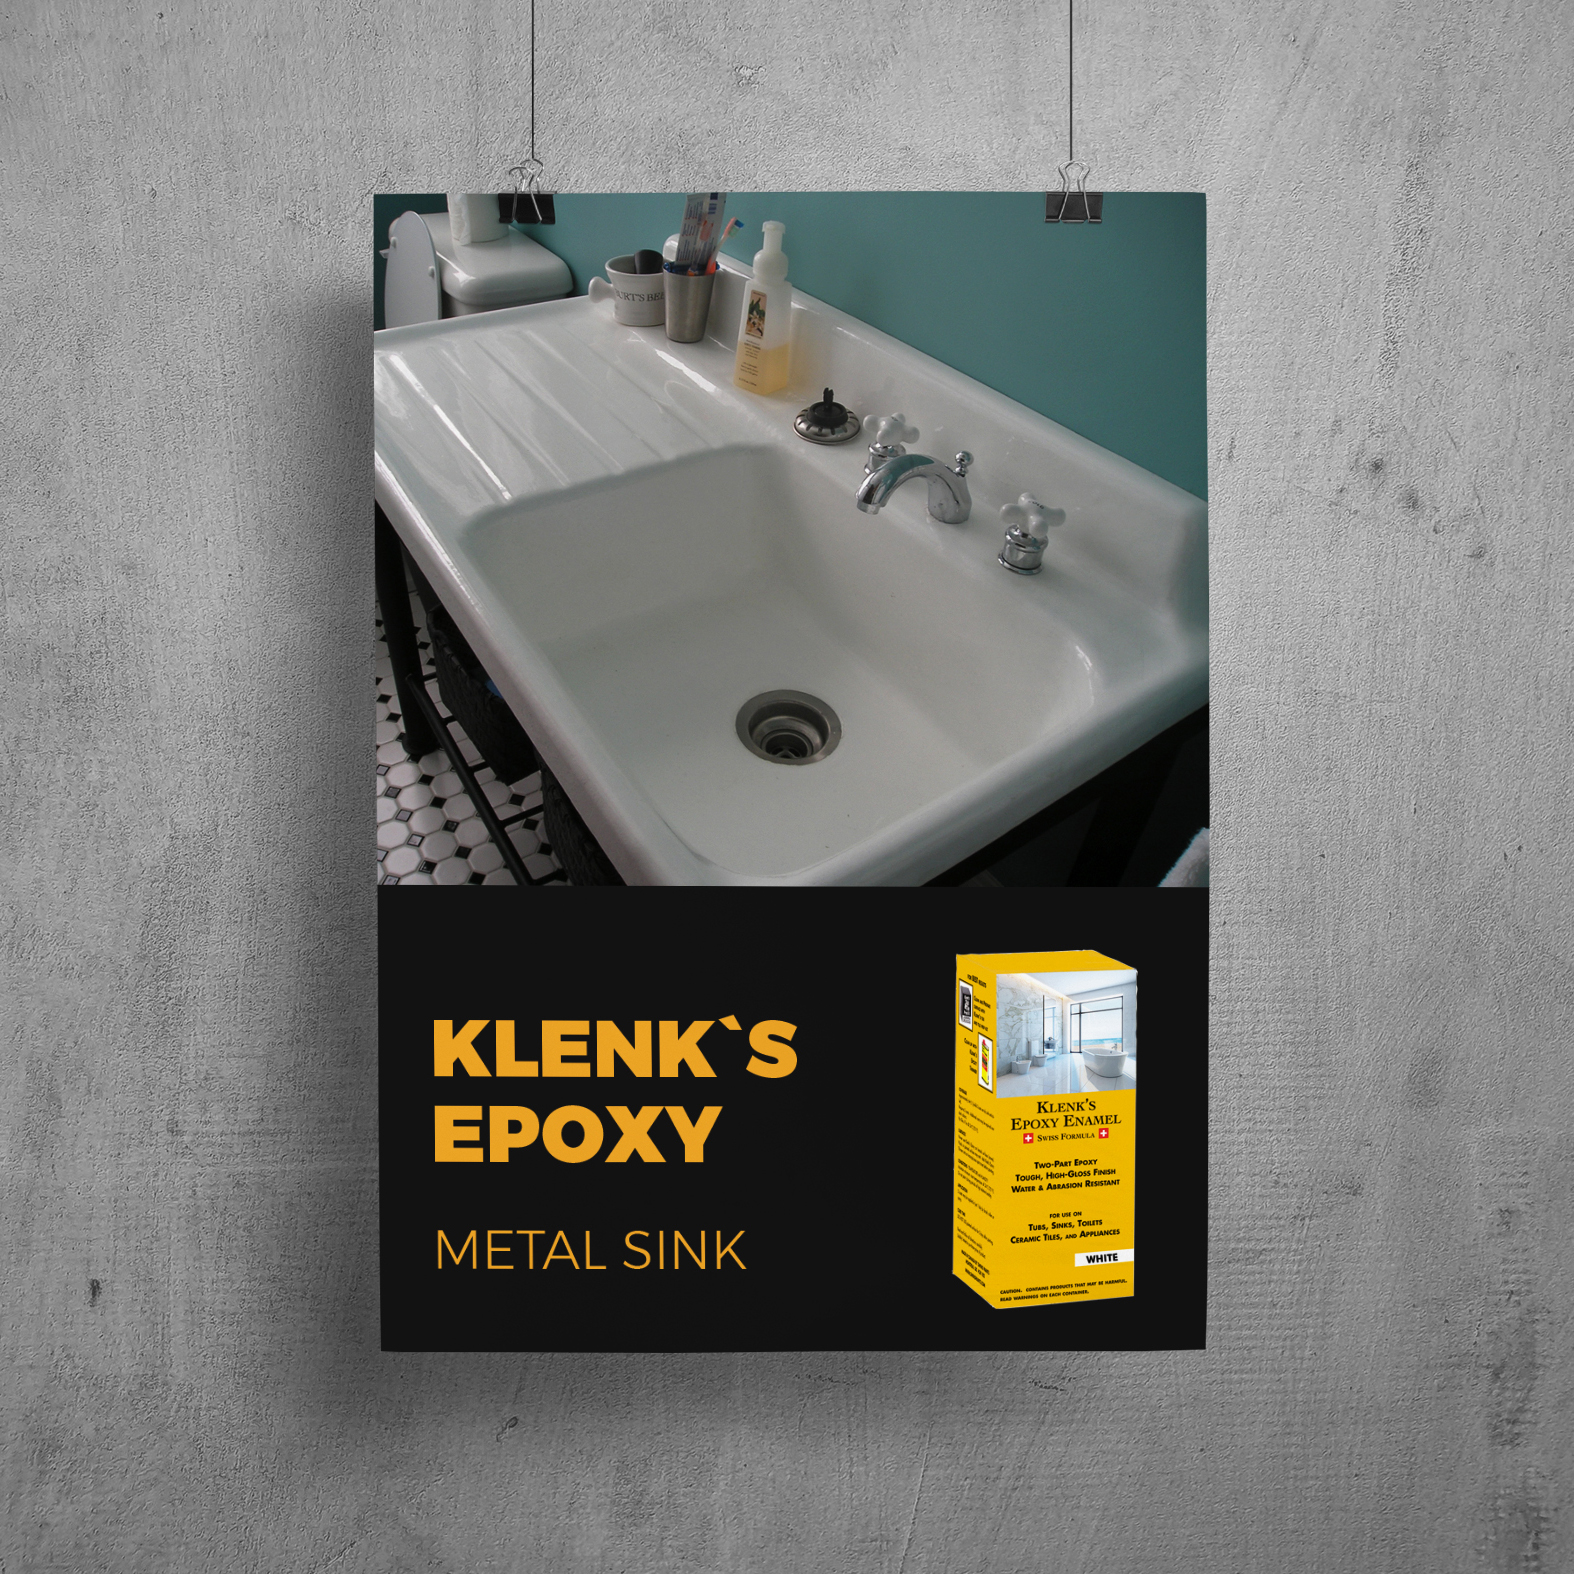 Klenk's Epoxy  Metal Sink